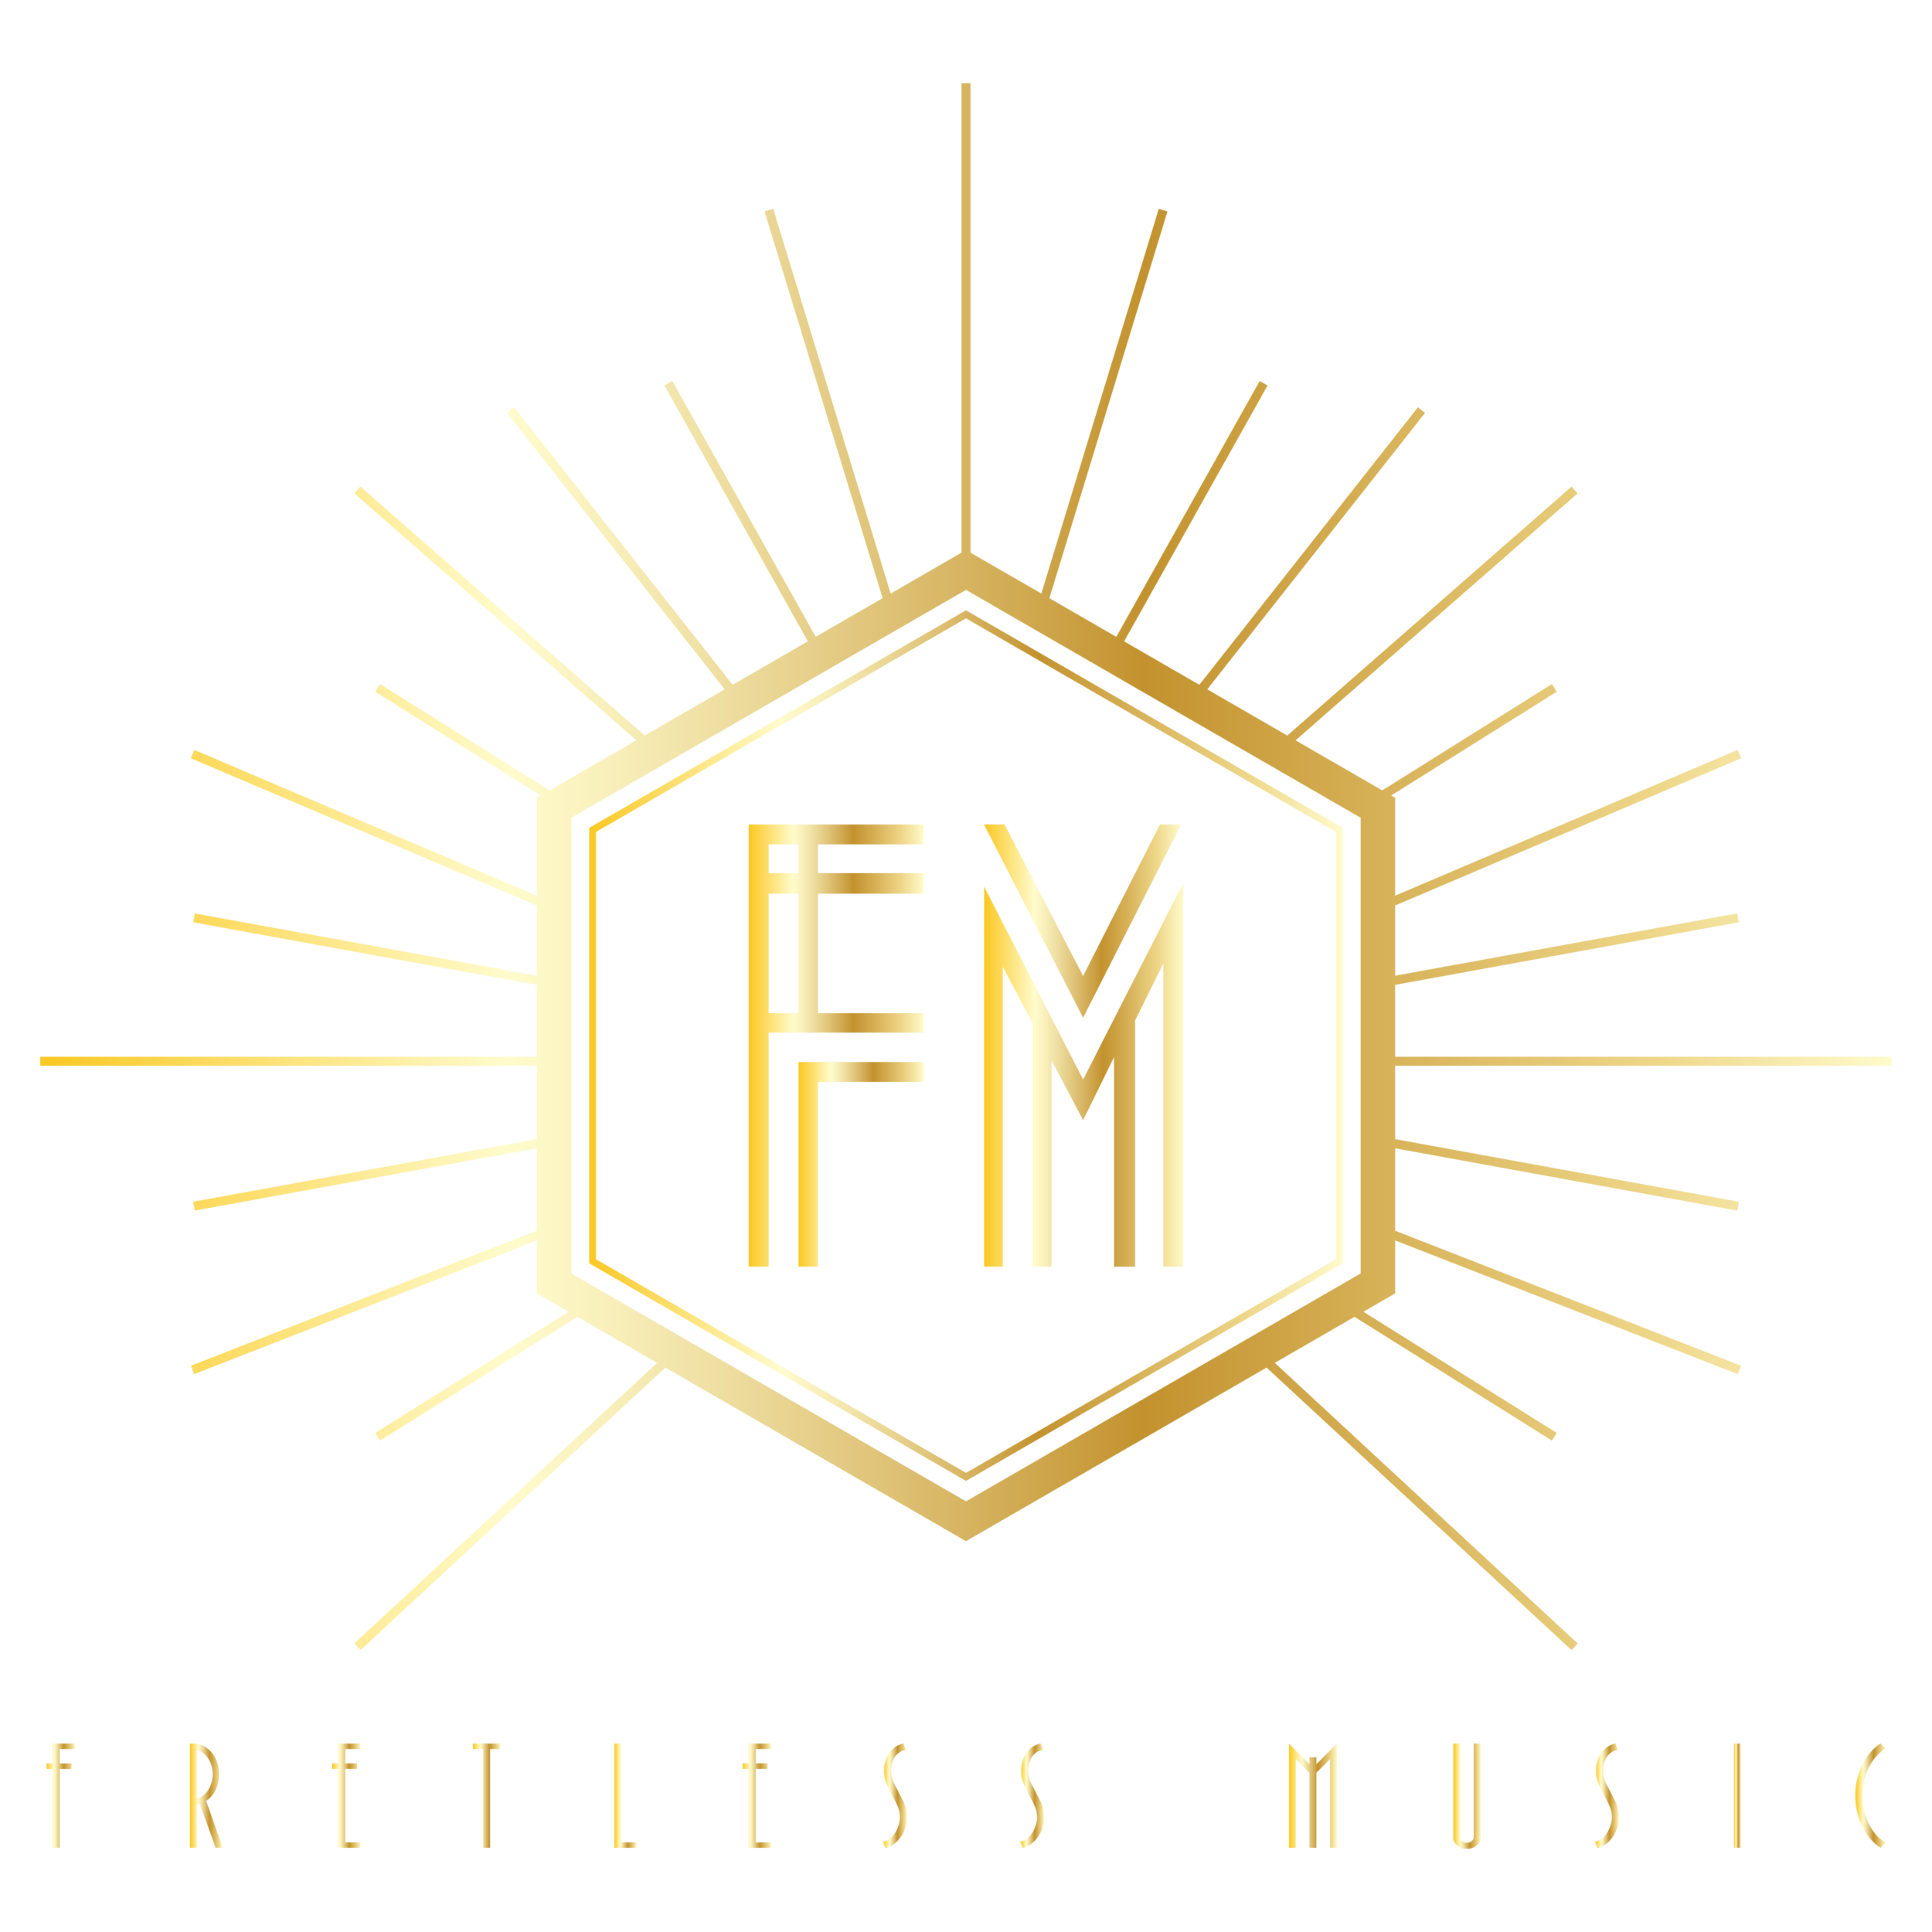 Fretless Music, LLC